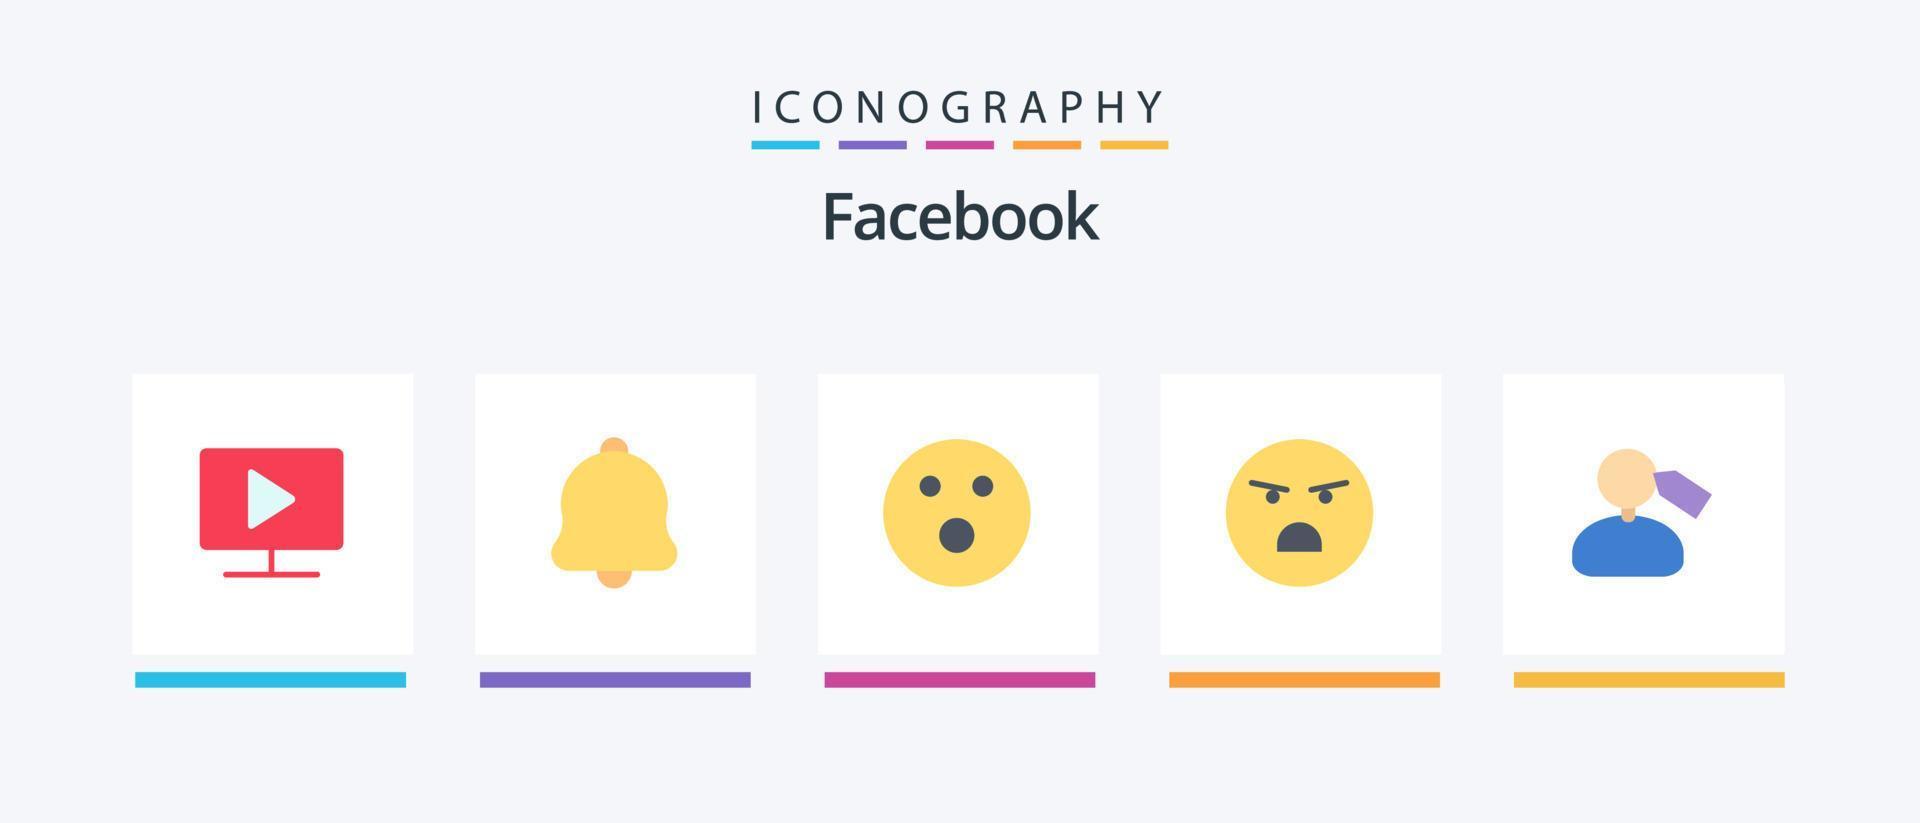 Facebook Flat 5 Icon Pack Including mark. feeling. golfball. faint. emoji. Creative Icons Design vector